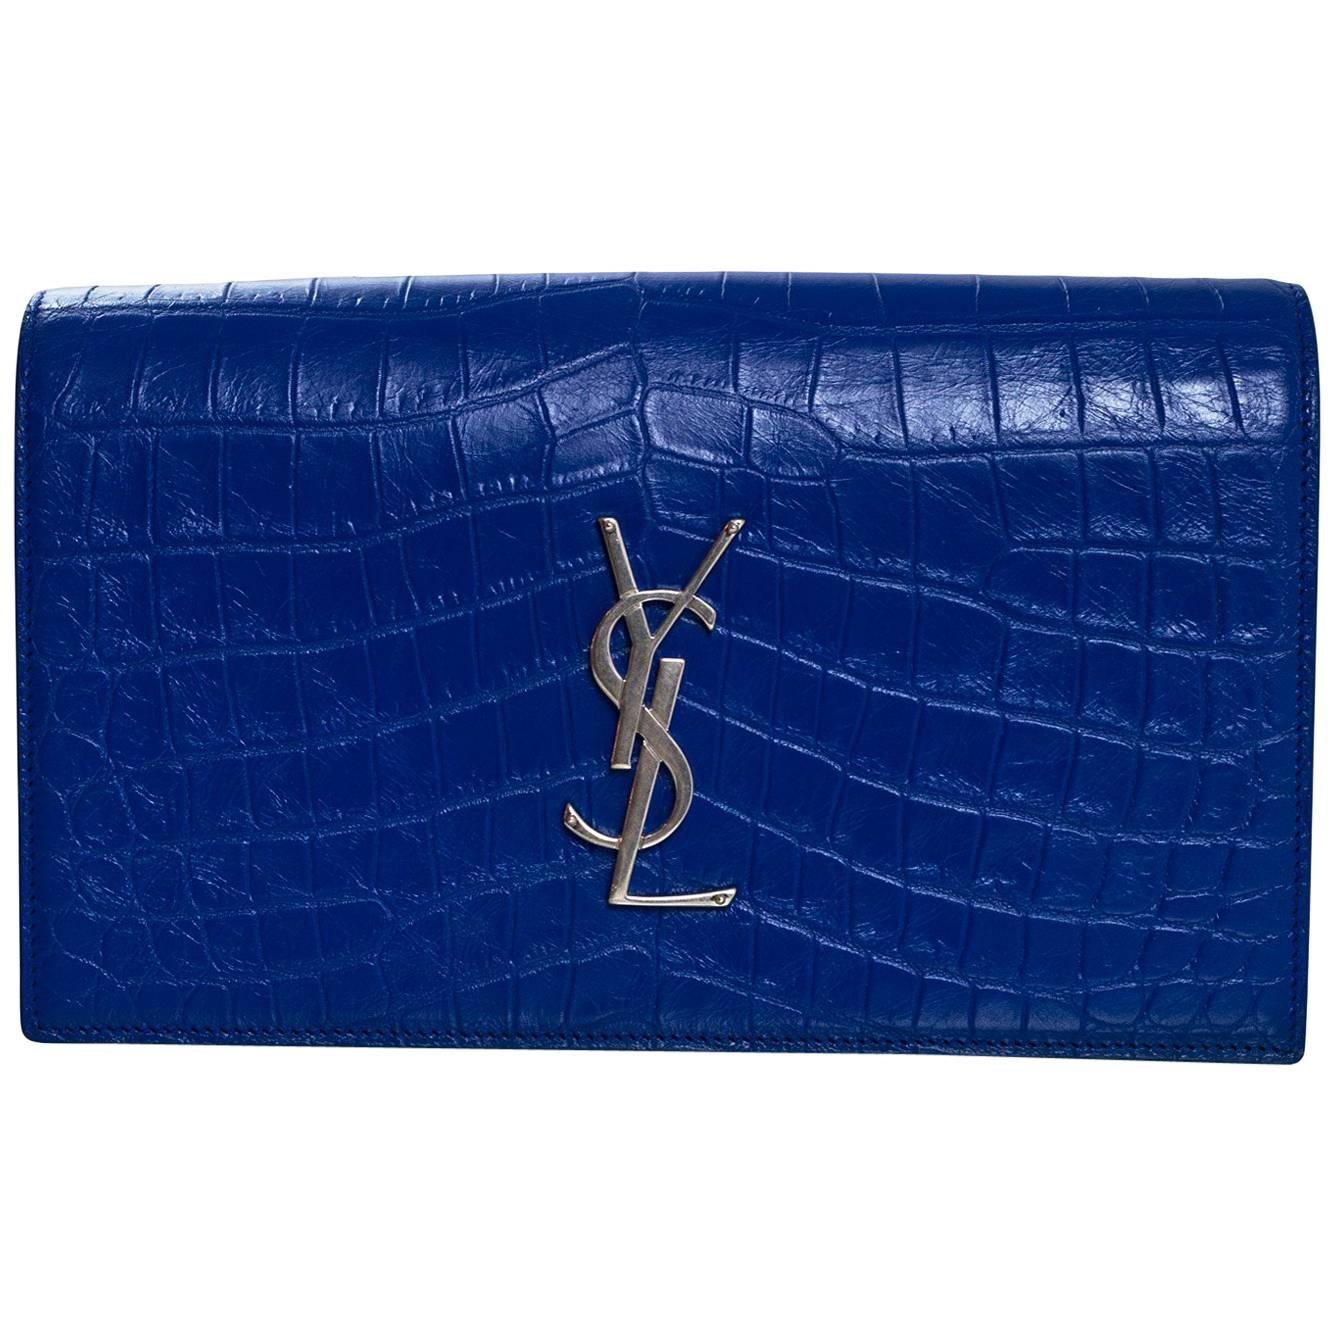 Saint Laurent Royal Blue Embossed Crocodile Monogram Kate Clutch Bag with Box